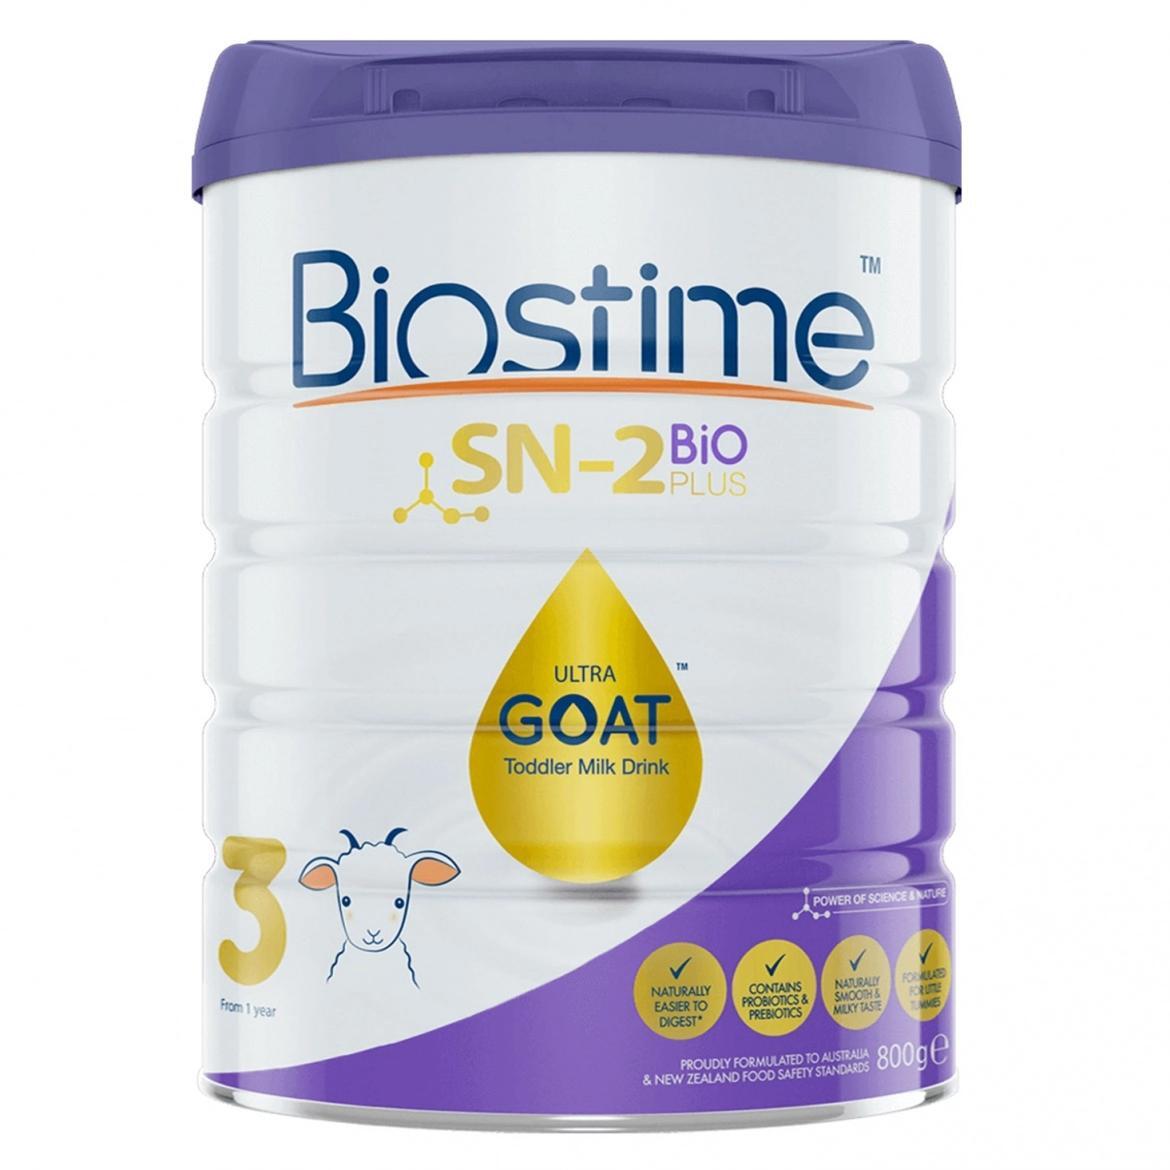 Sữa Biostime SN-2 Bio plus utral goat số 3 800g